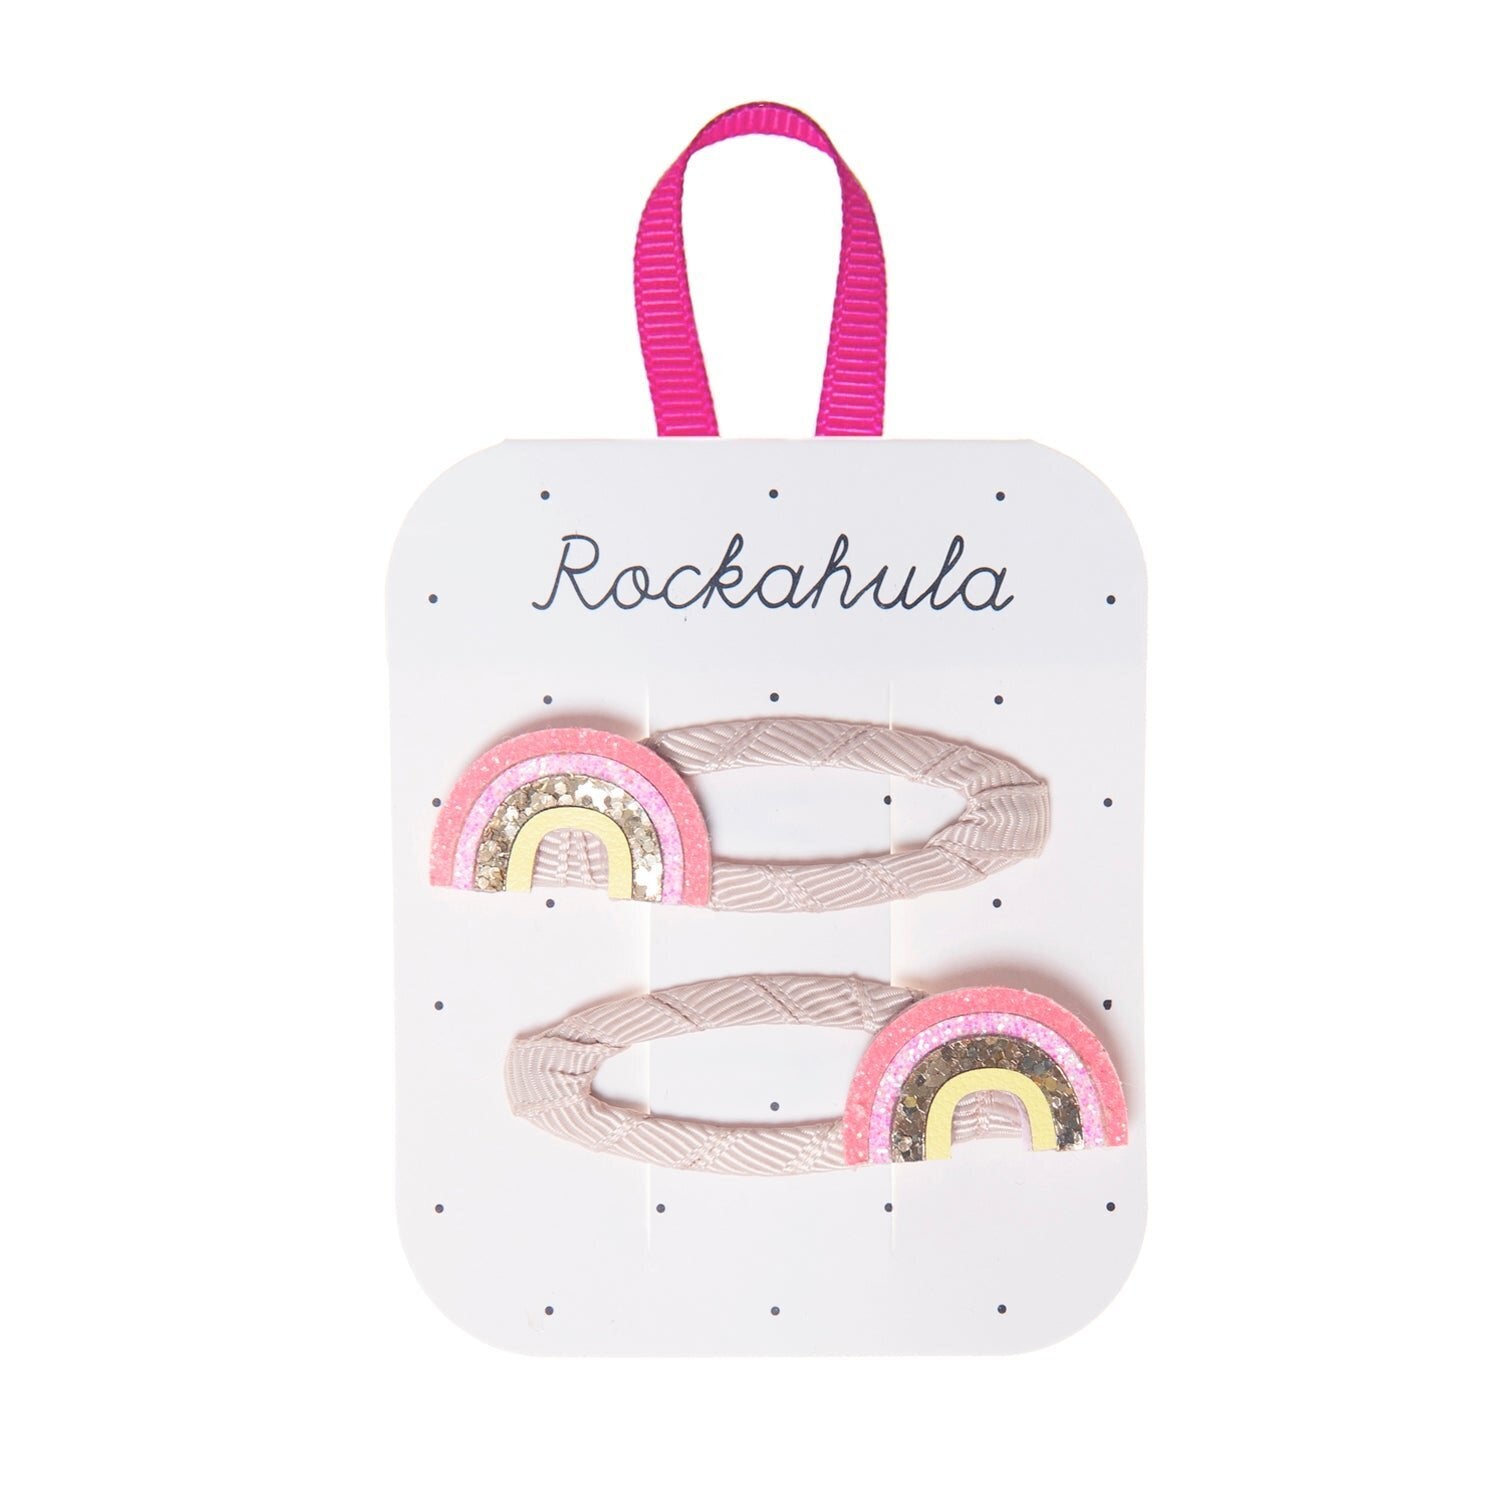 Rockahula - cheerful rainbow clips